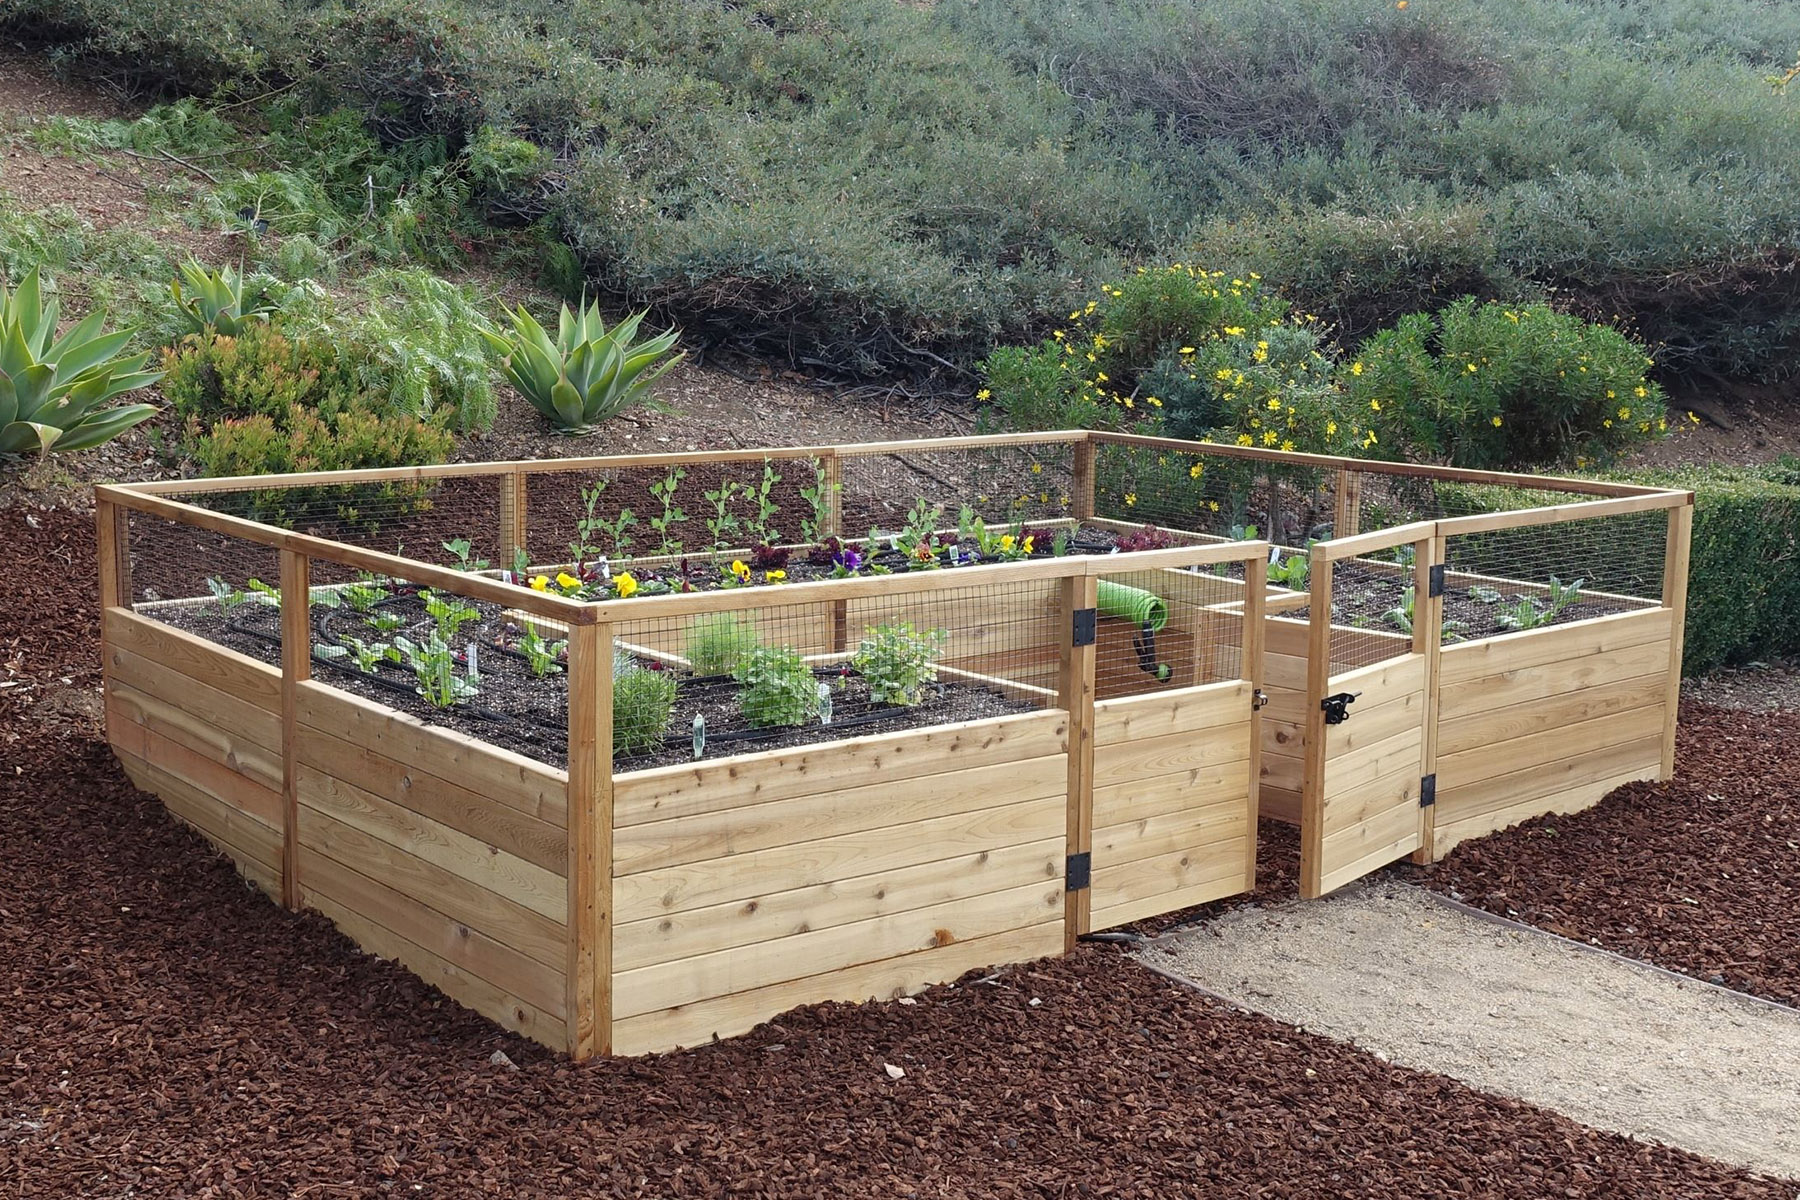 8'x12' Complete Vegetable Garden Kit